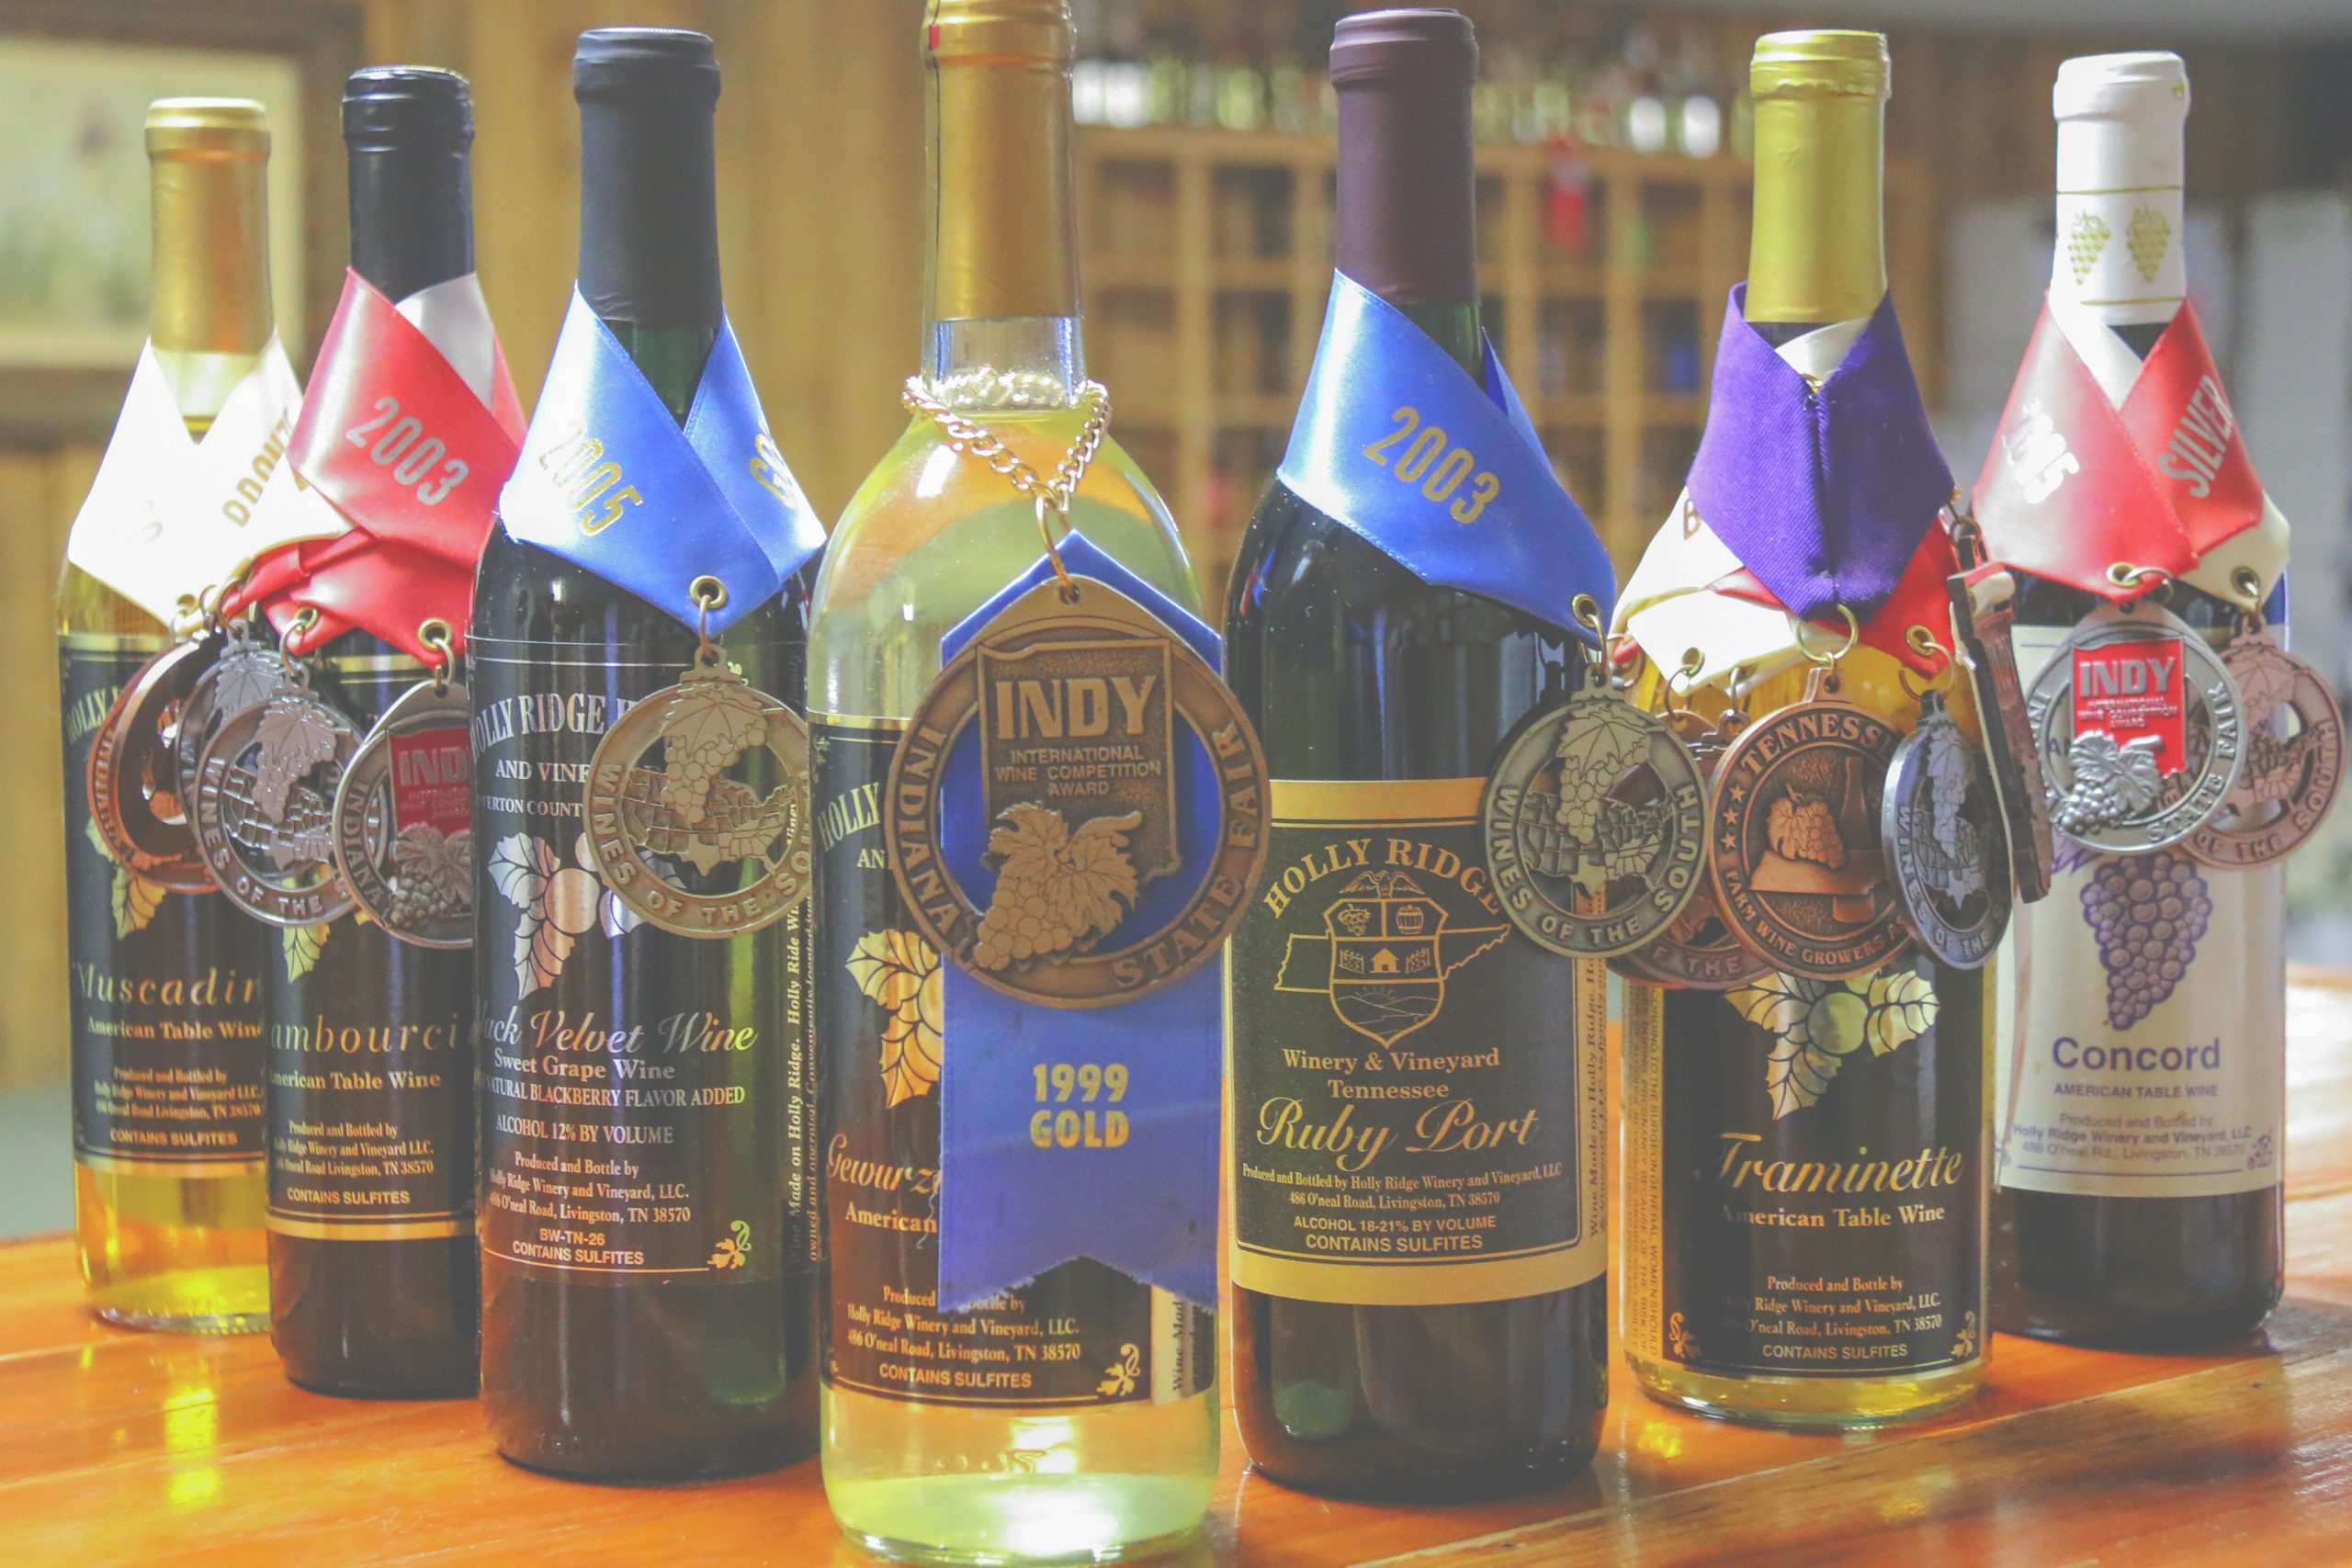 selection of holly ridge wine that won awards